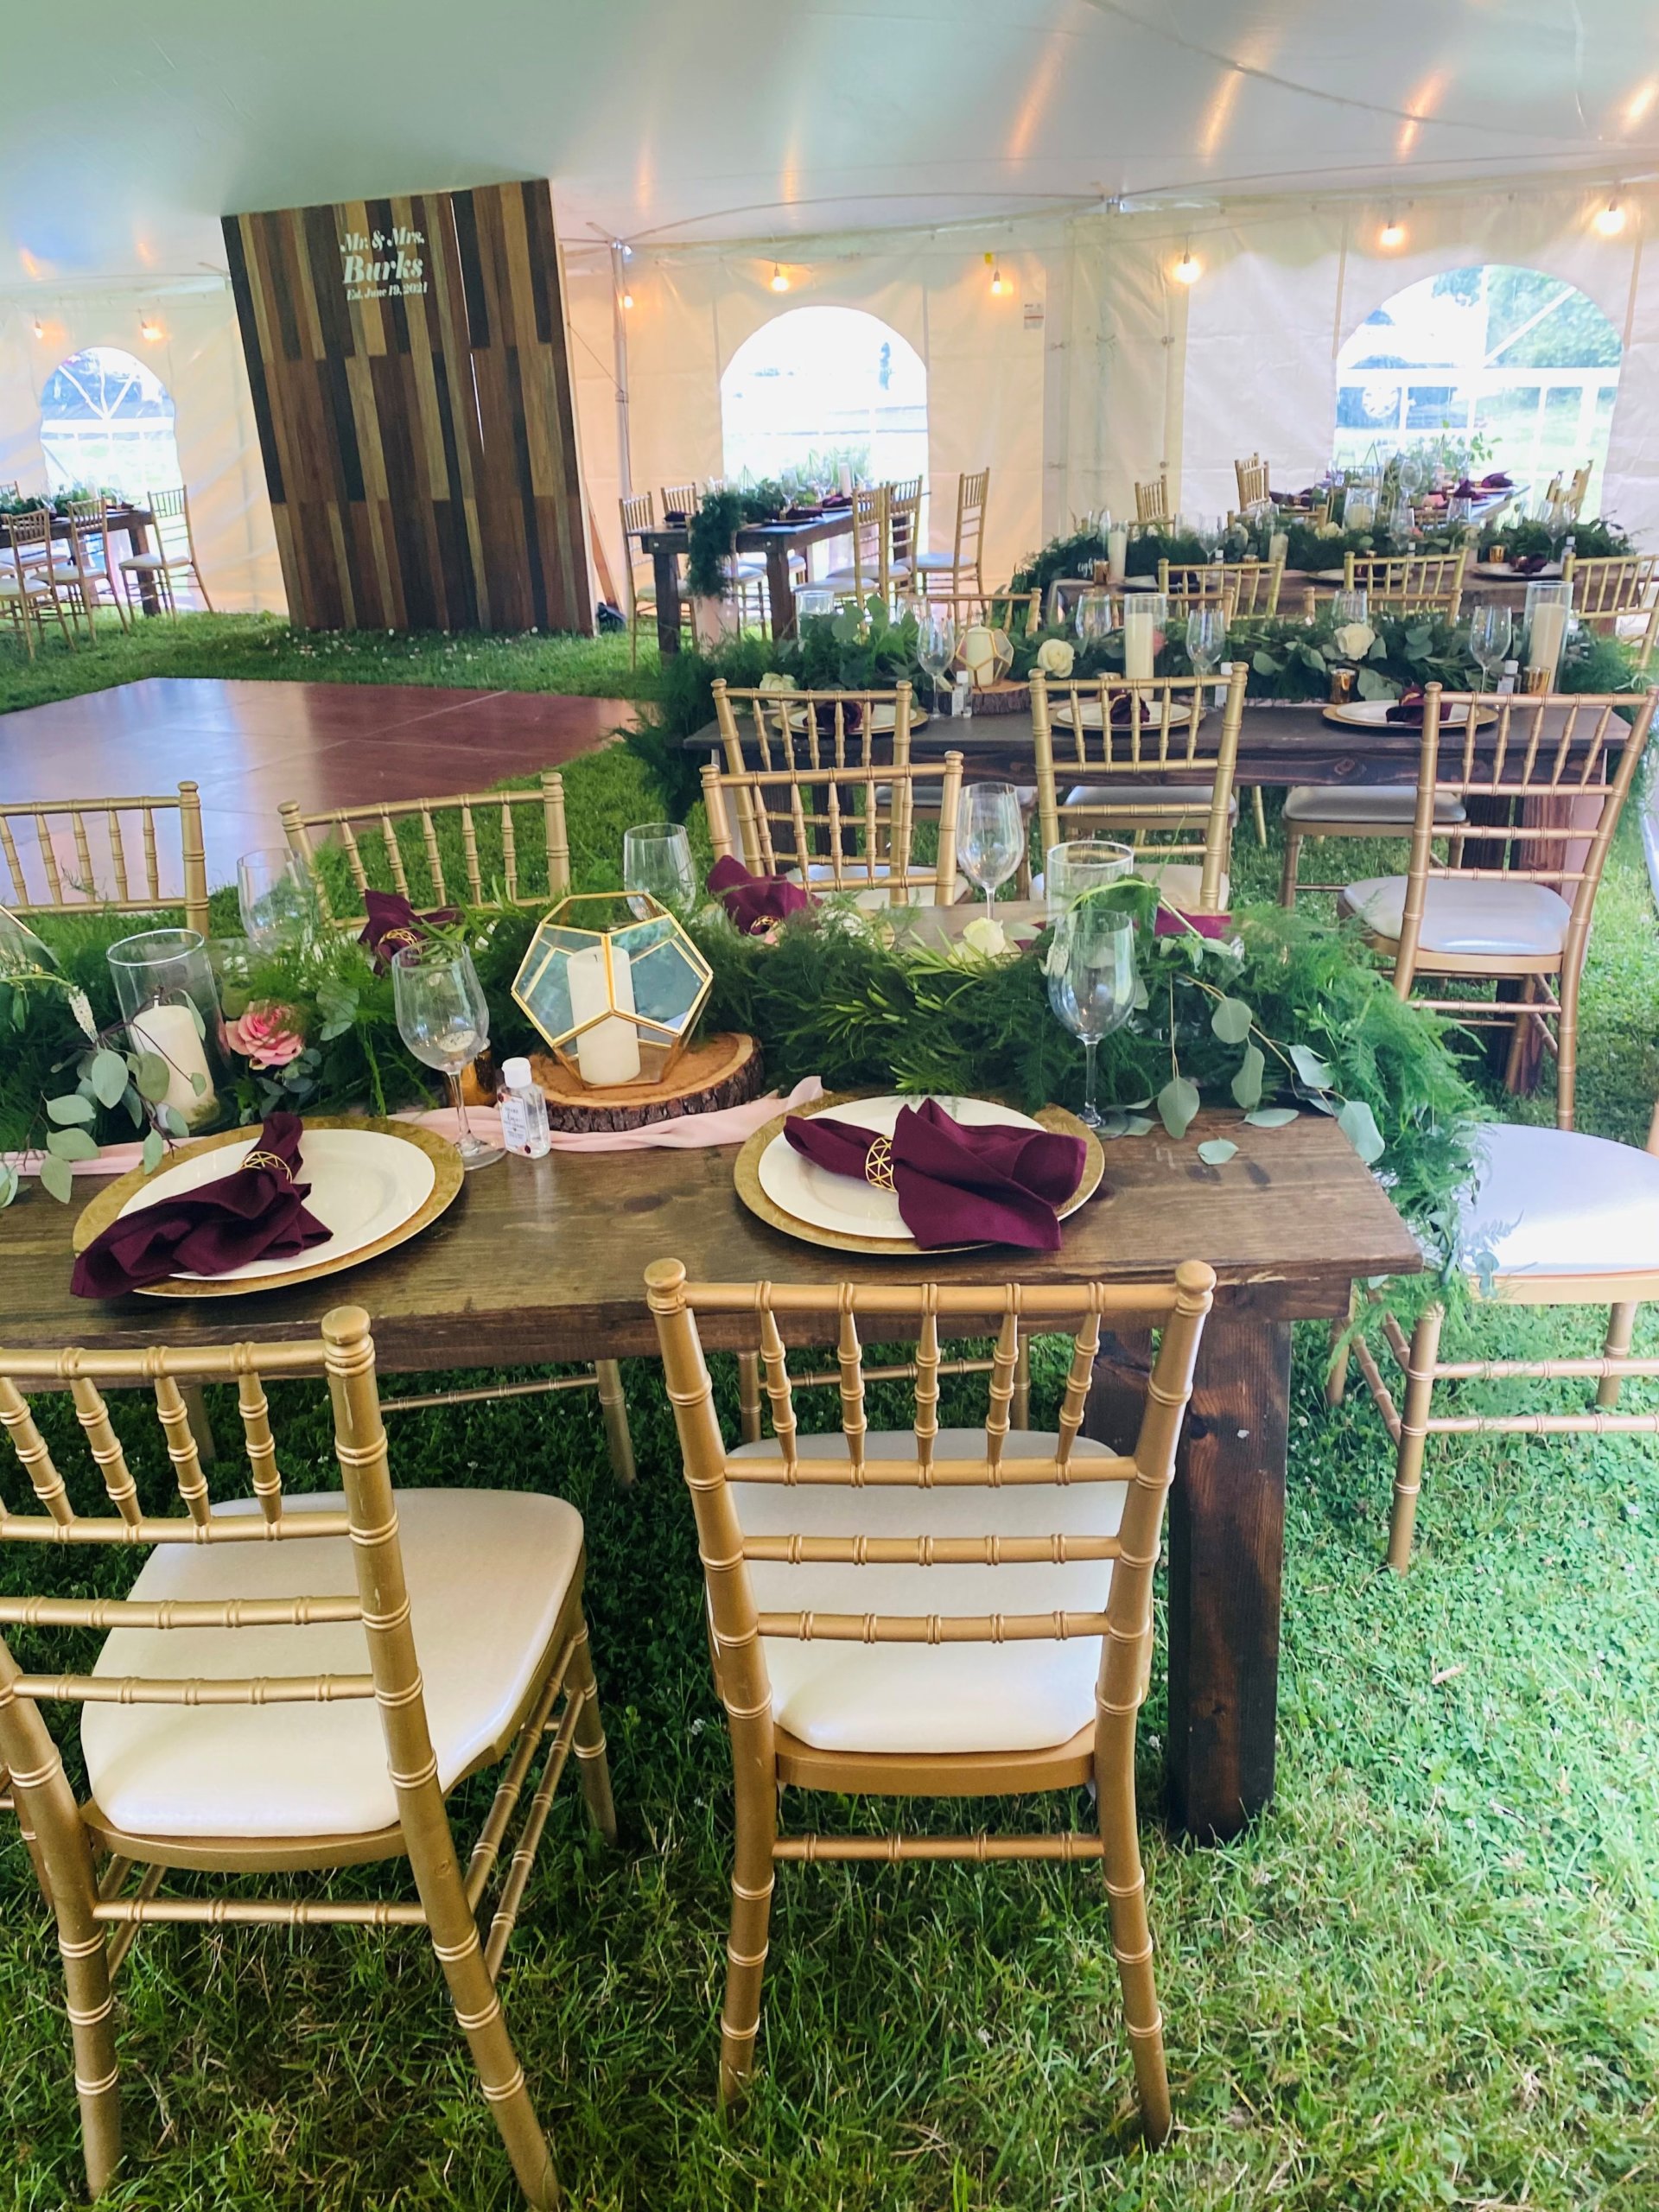 FARMHOUSE W CHIAVARI TENNE WEDDING scaled - Tables and Chairs